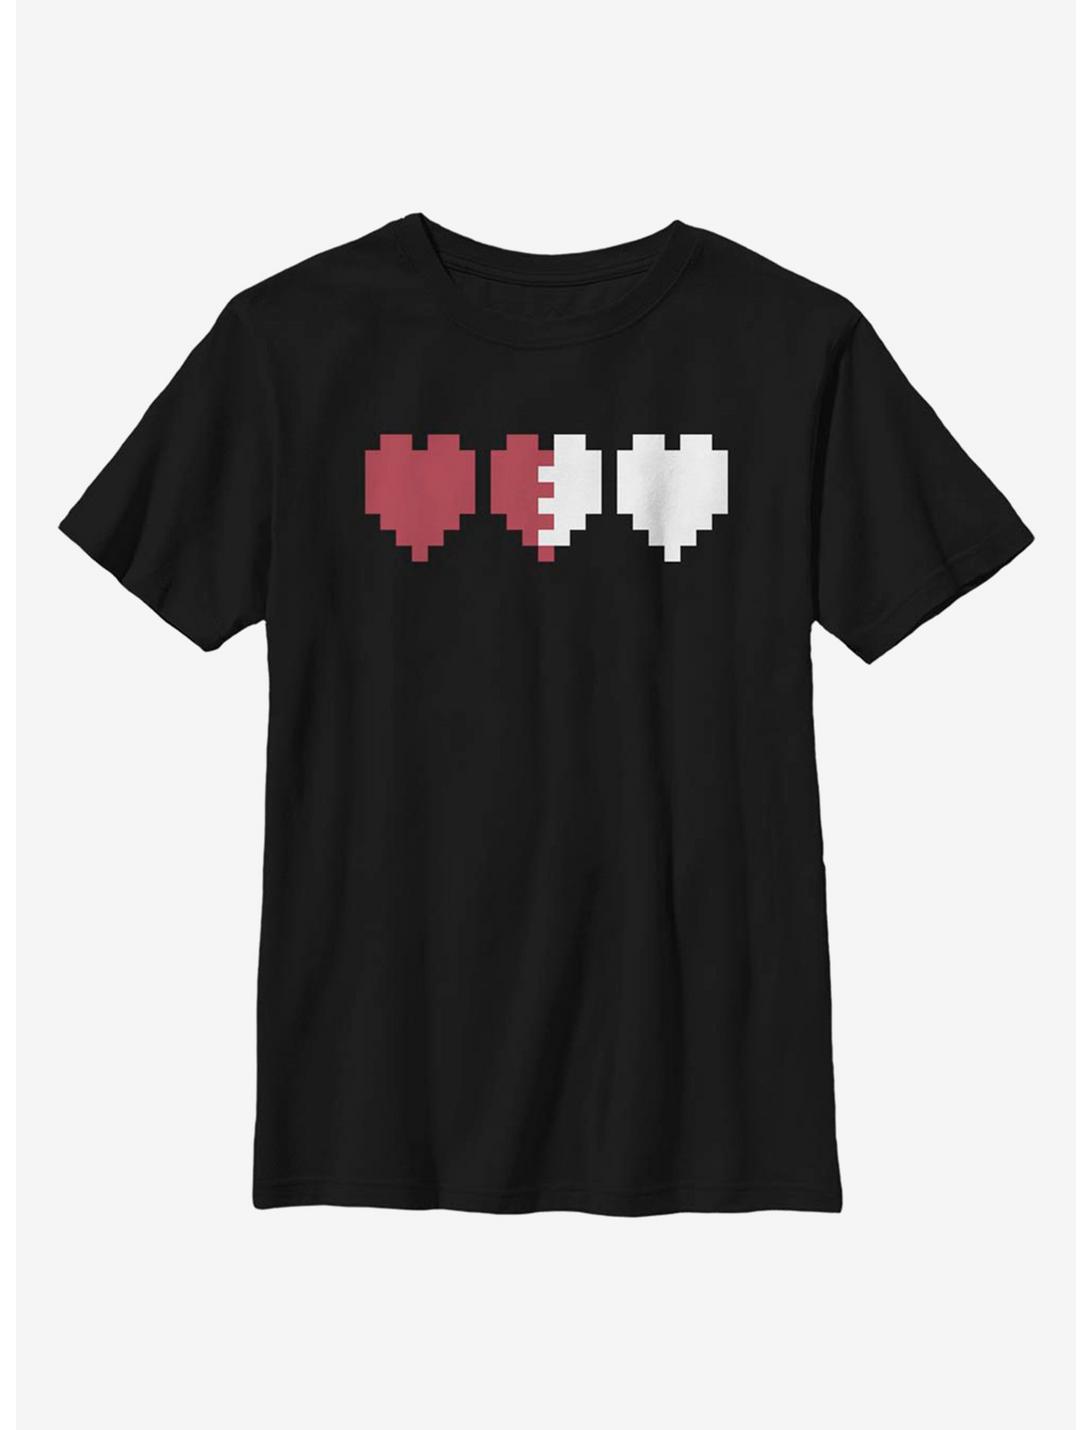 Nintendo The Legend Of Zelda Half Life Hearts Youth T-Shirt, BLACK, hi-res